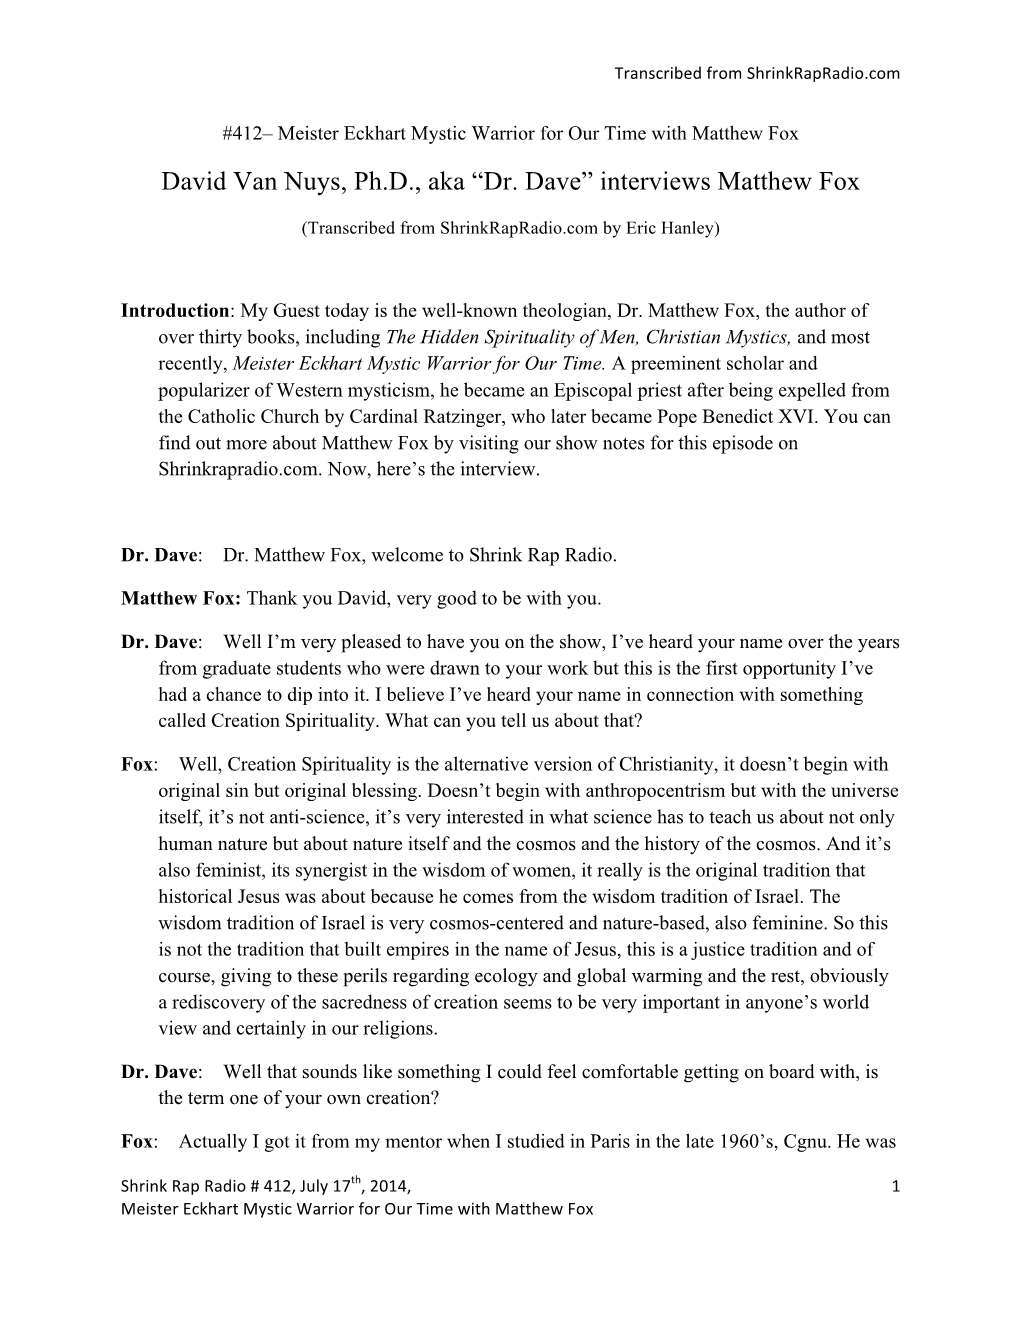 David Van Nuys, Ph.D., Aka “Dr. Dave” Interviews Matthew Fox